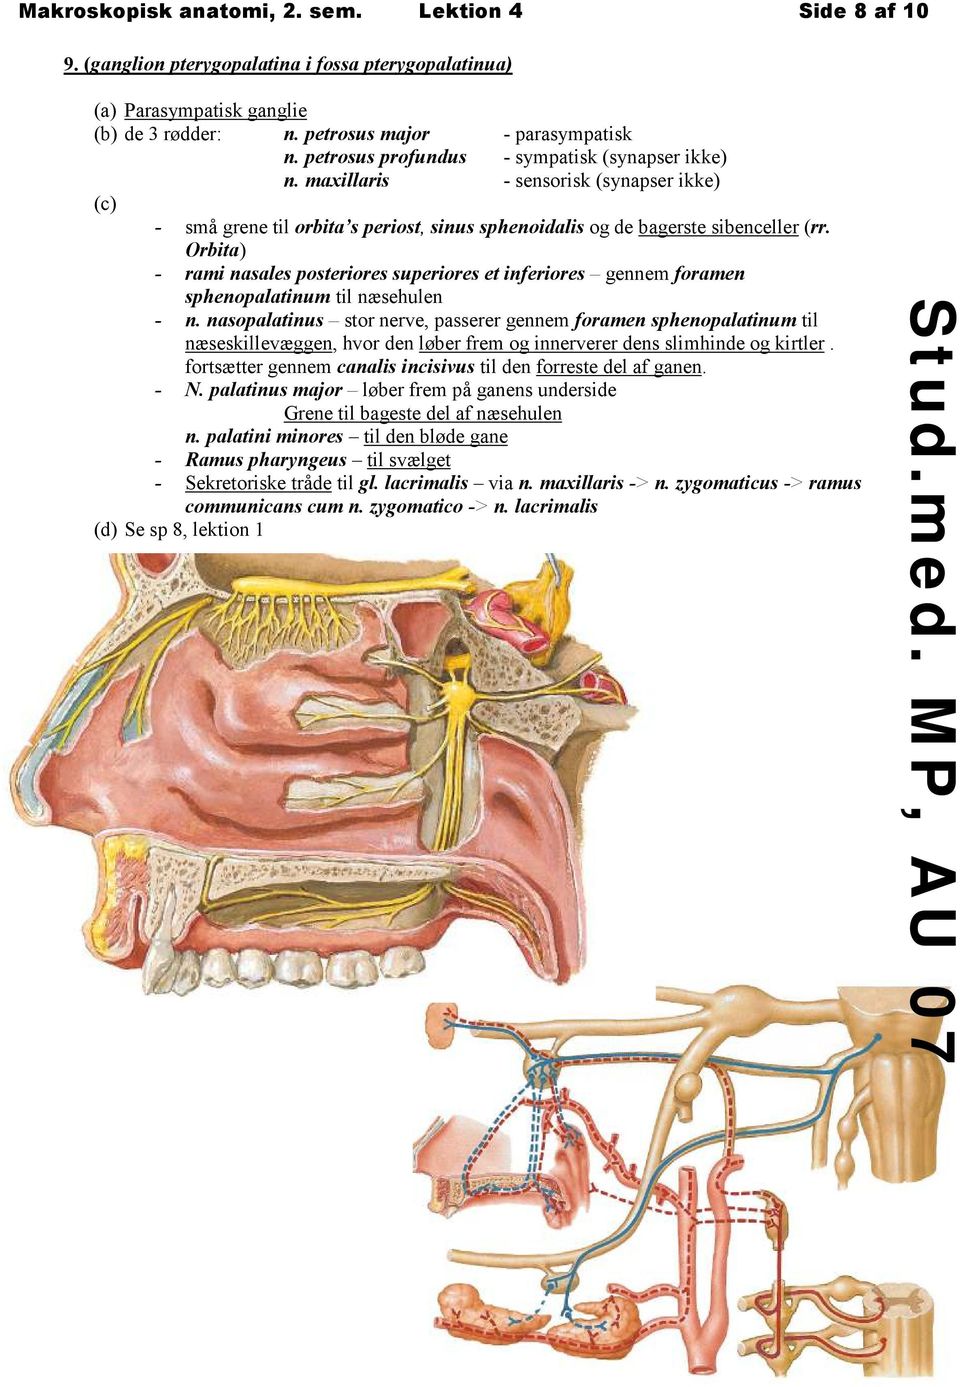 Orbita) - rami nasales posteriores superiores et inferiores gennem foramen sphenopalatinum til næsehulen - n.